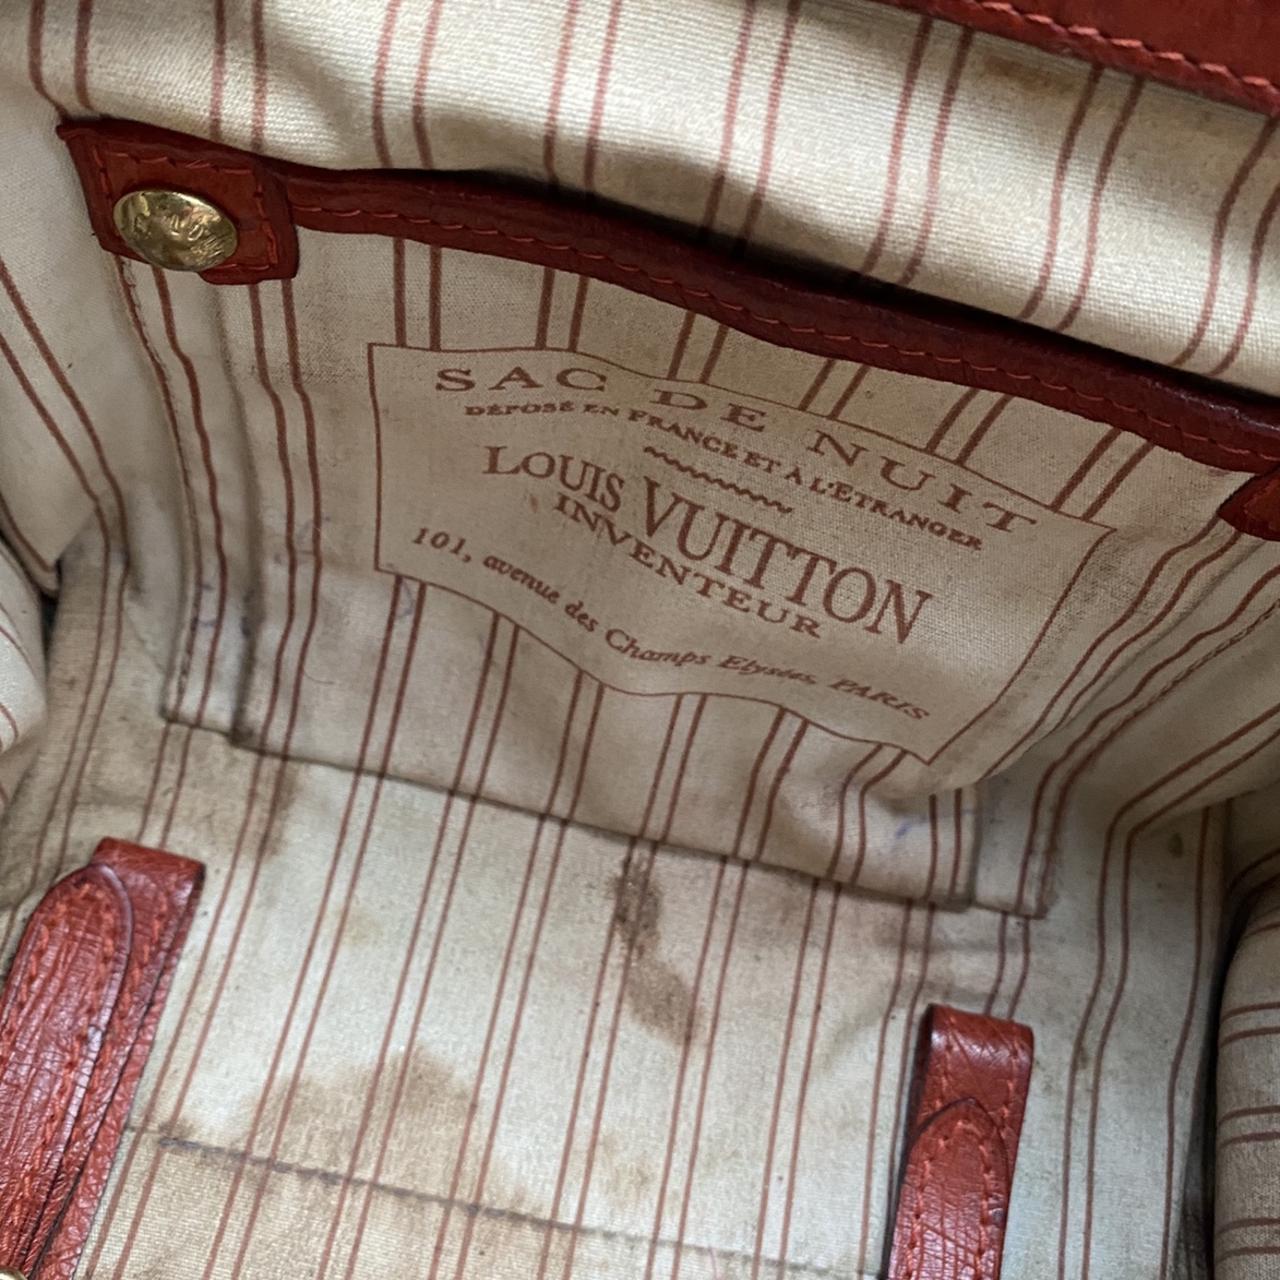 Louis Vuitton Neverfull Tote Bag MM Black Monogram - Depop